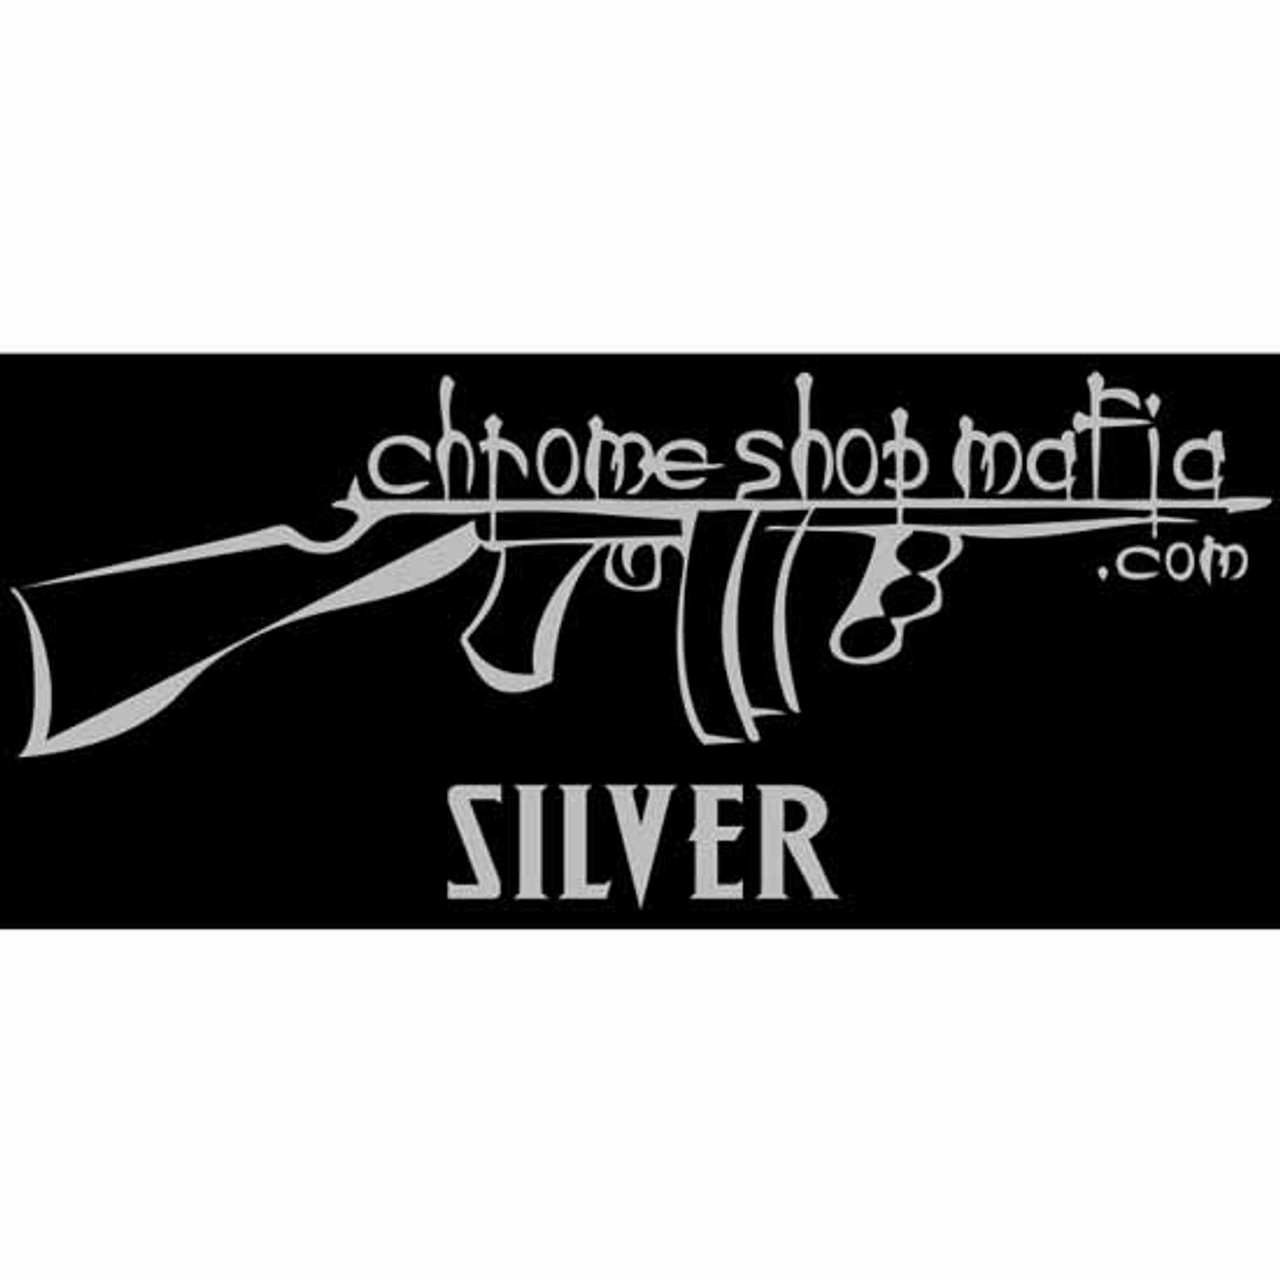 Chrome Shop Mafia Decal 7 Inch Silver - Elite Truck Accessories